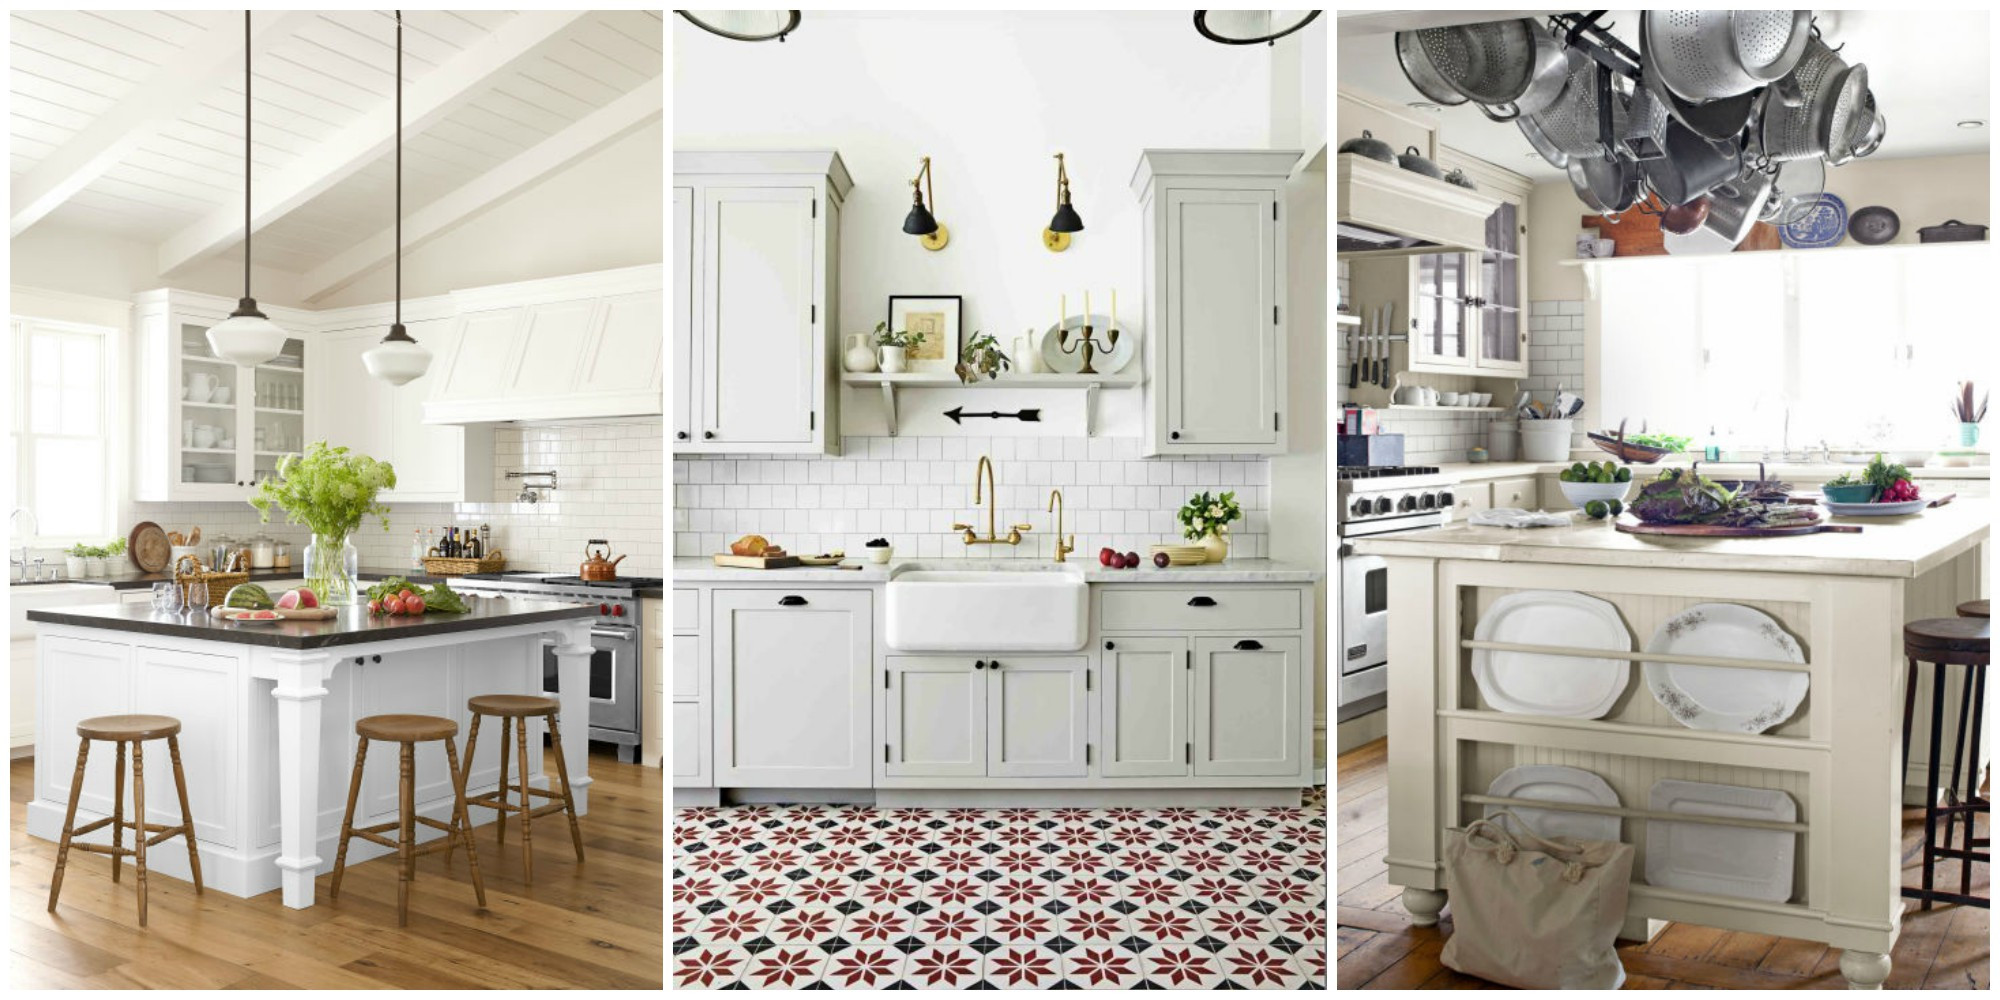 Best Kitchen Wall Colors
 10 Best White Kitchen Cabinet Paint Colors Ideas for